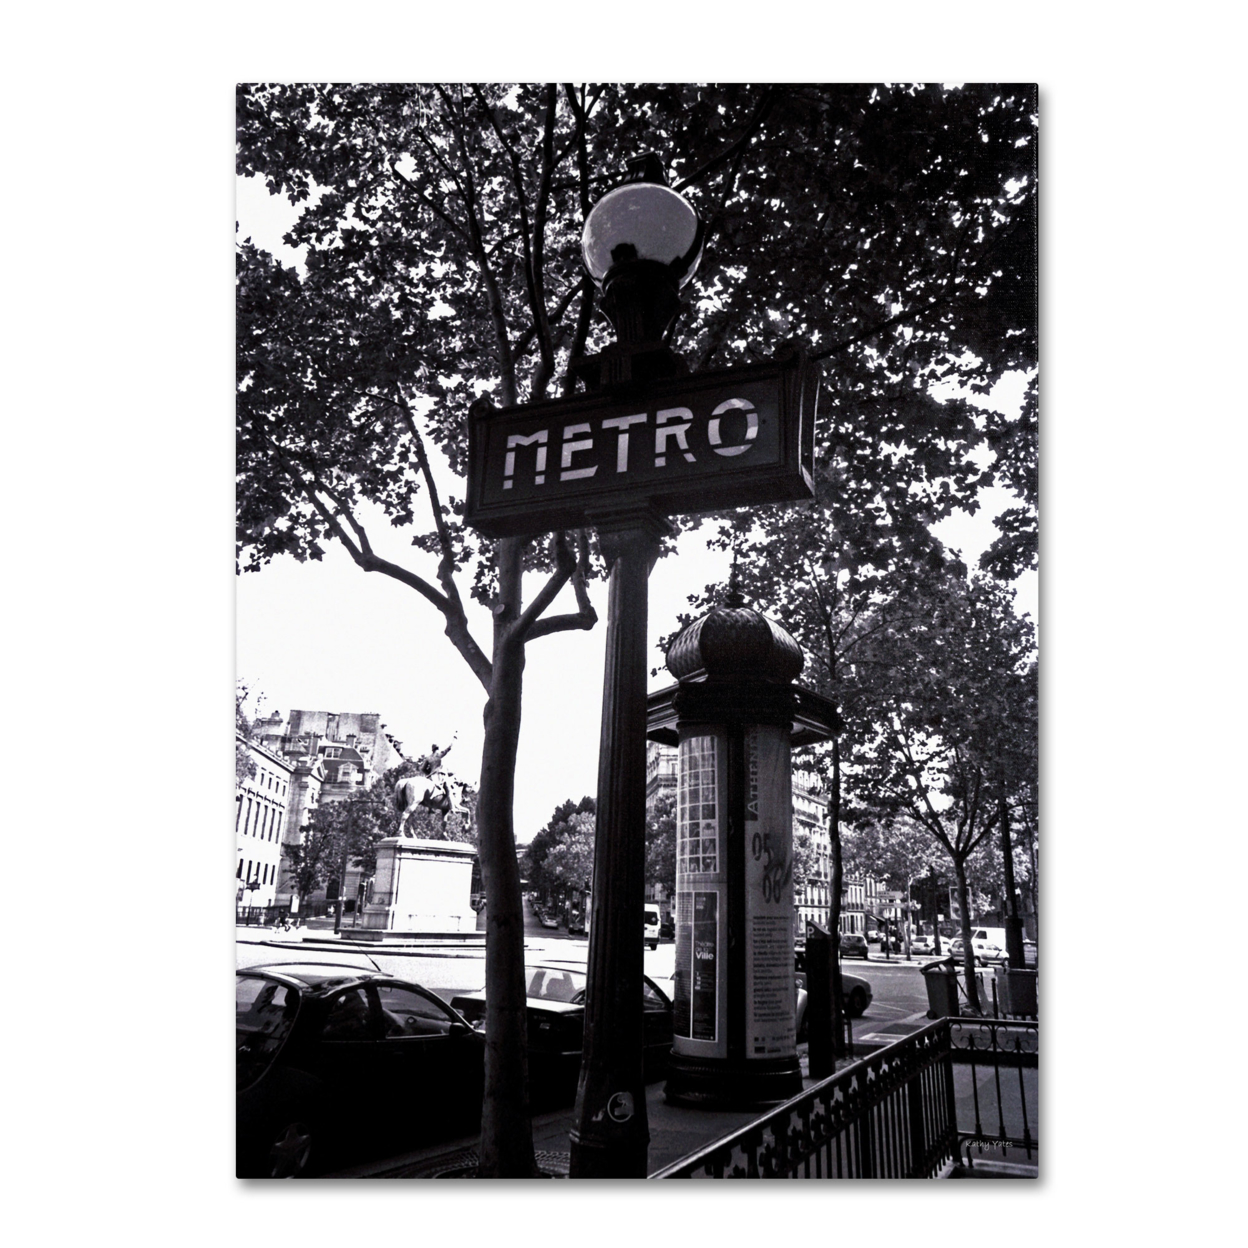 Kathy Yates 'Paris Metro And Kiosk' Canvas Wall Art 35 X 47 Inches